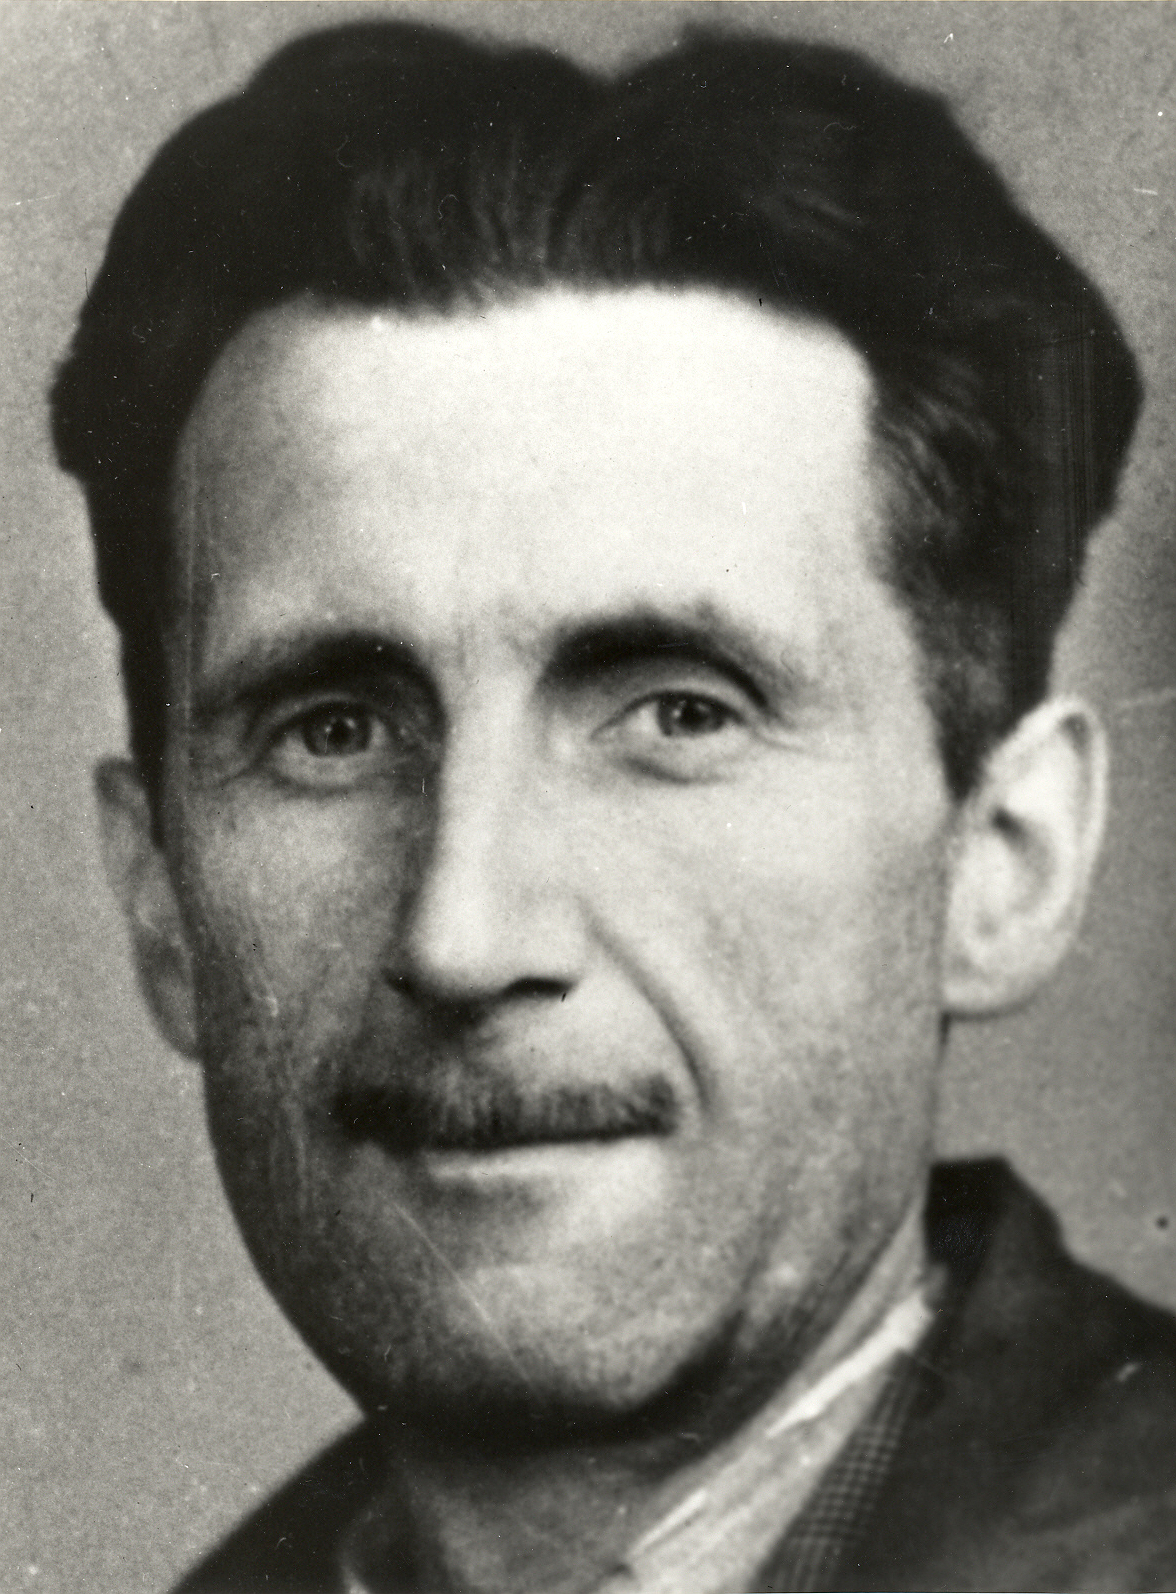 George Orwell press photo